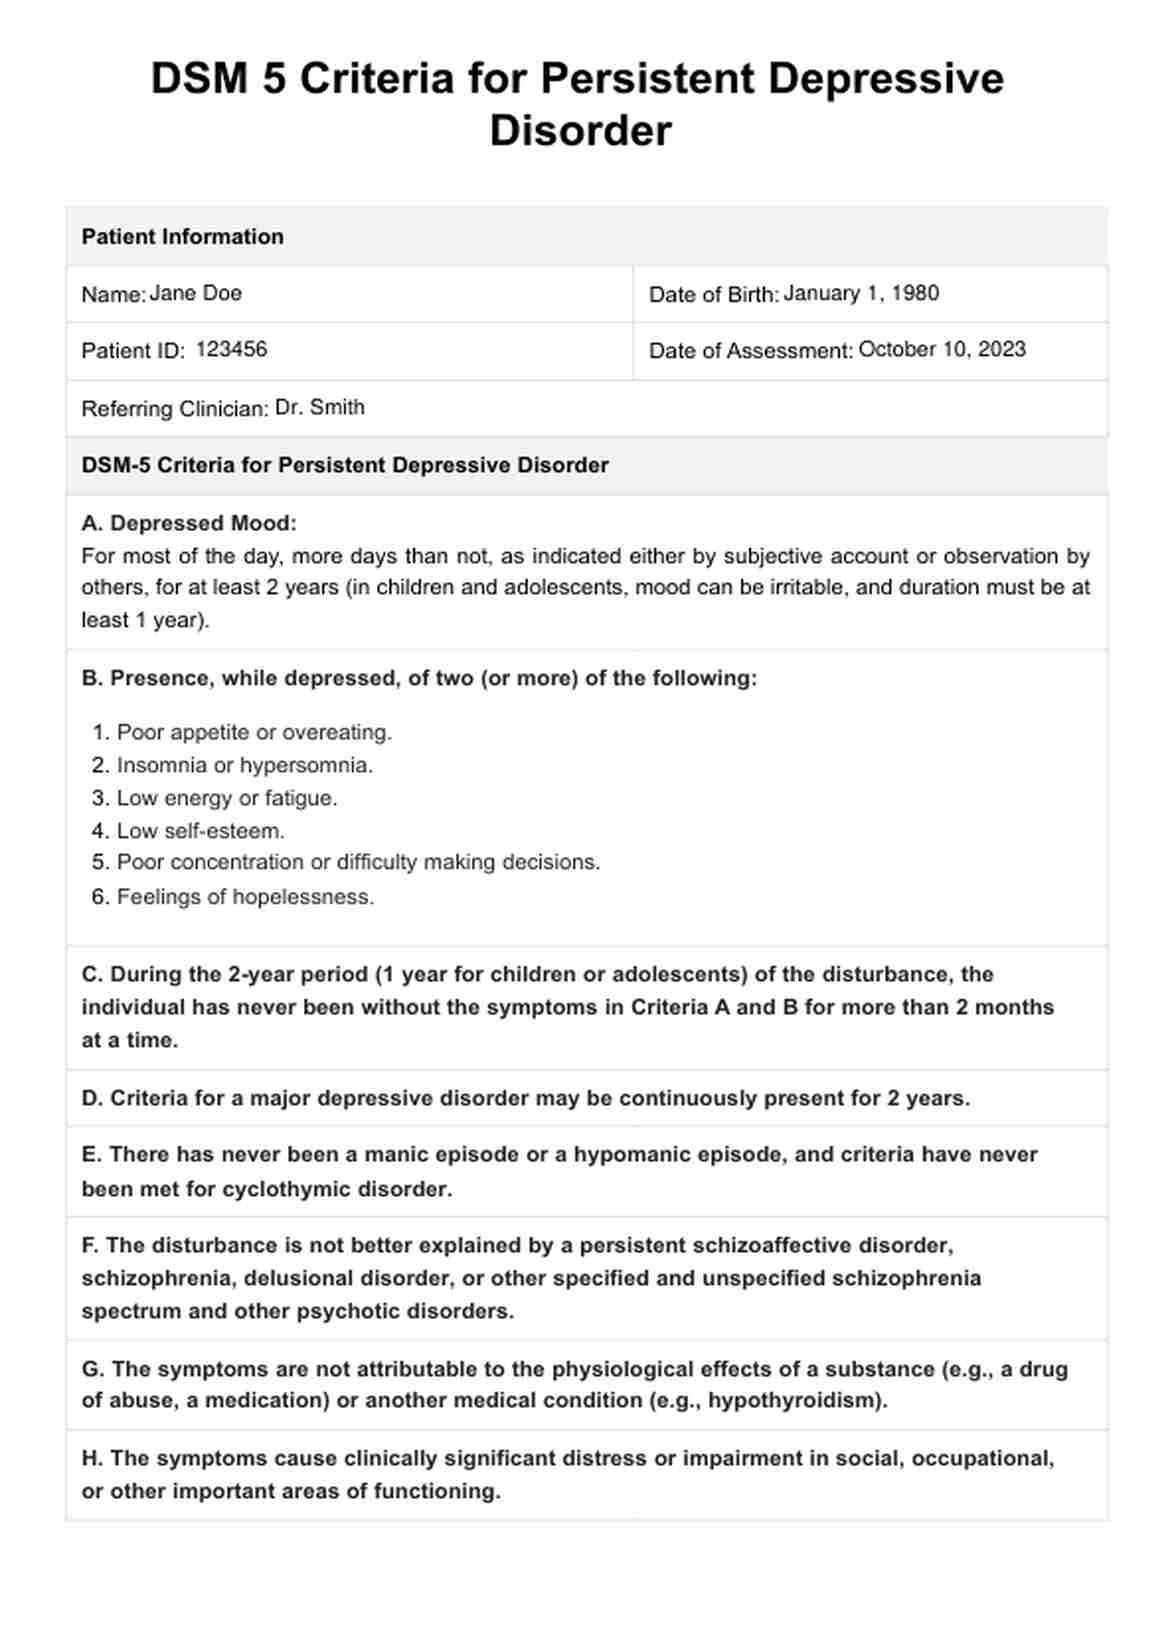 DSM 5 Criteria for Persistent Depressive Disorder PDF Example